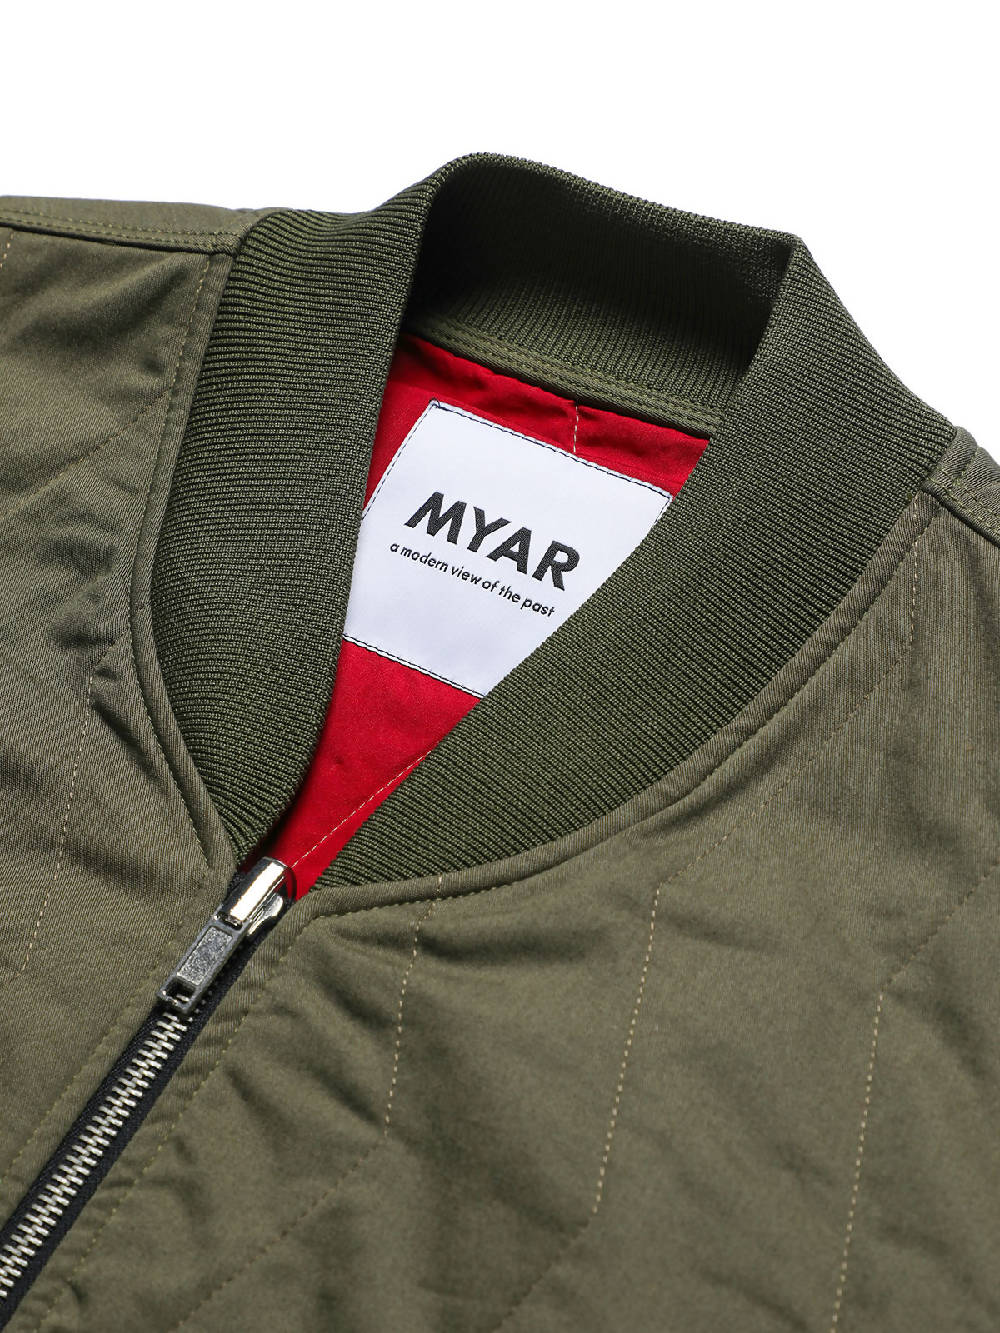 Myar Myjc12 Reversible Green Flying Jacket